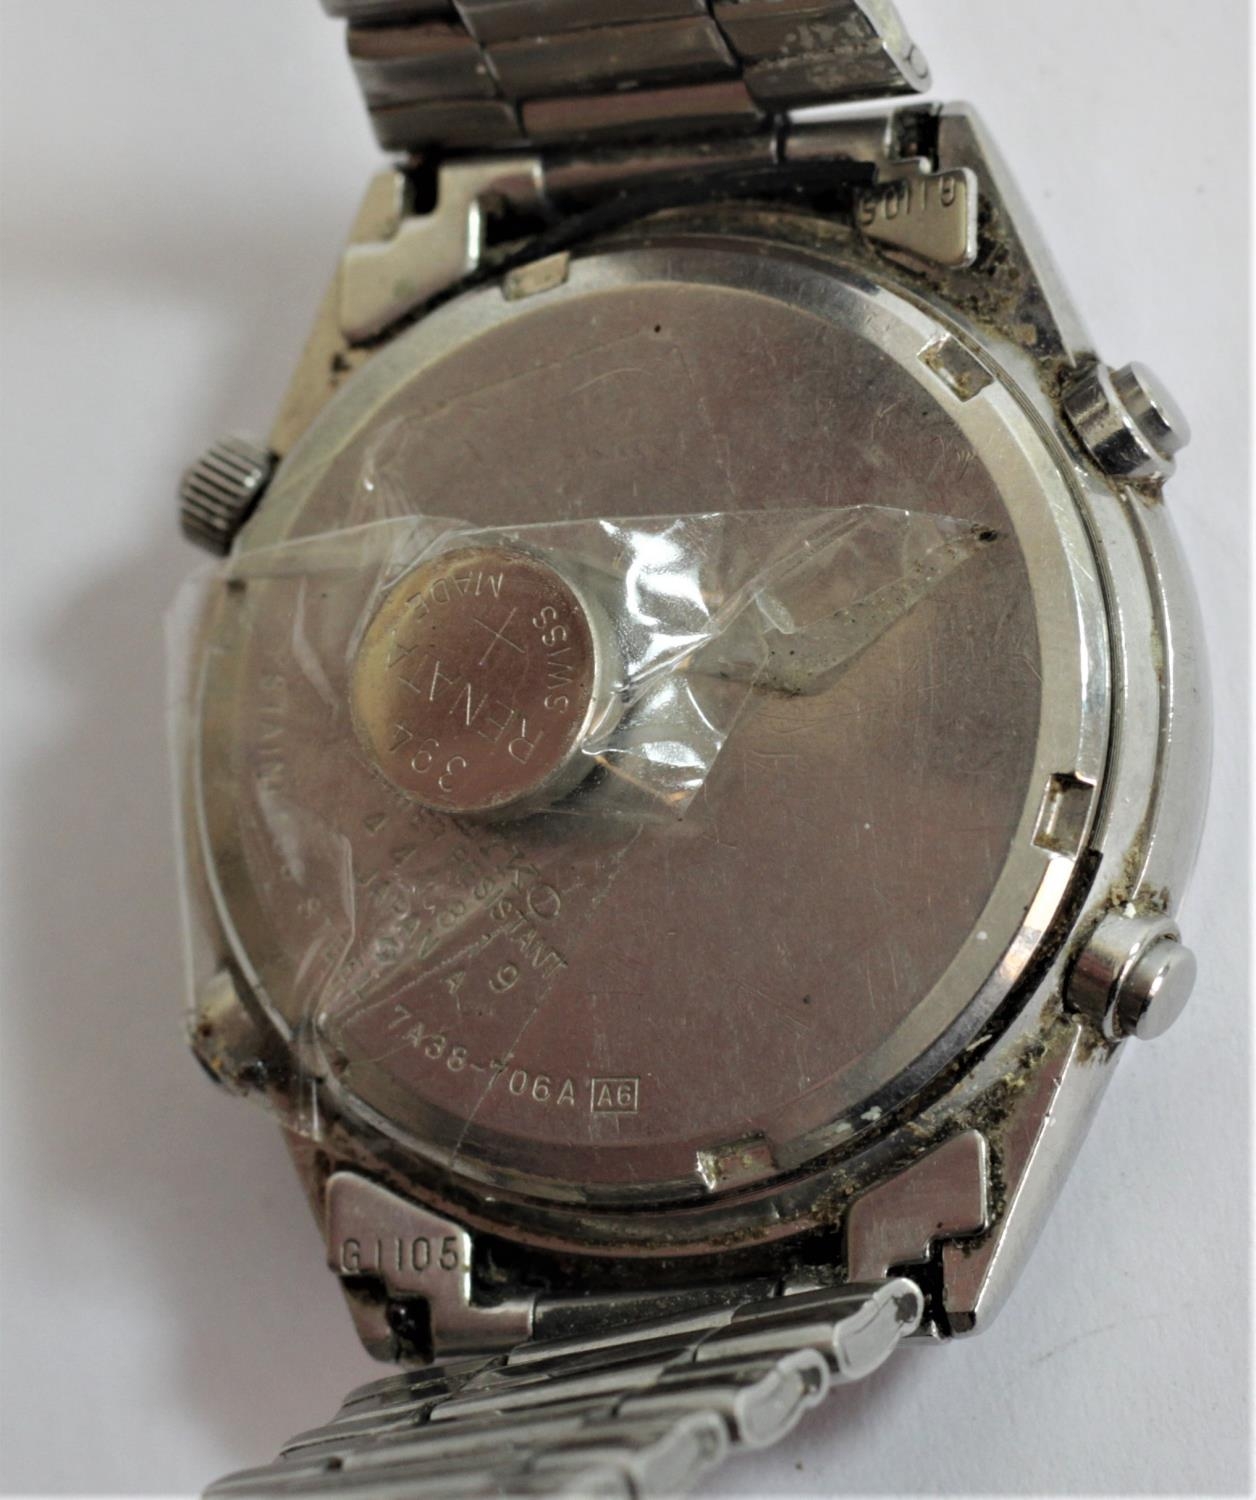 Seiko Quartz Chronograph, a stainless steel black dial gentleman's wristwatch, 7A38-706A, 441818 - Image 2 of 3